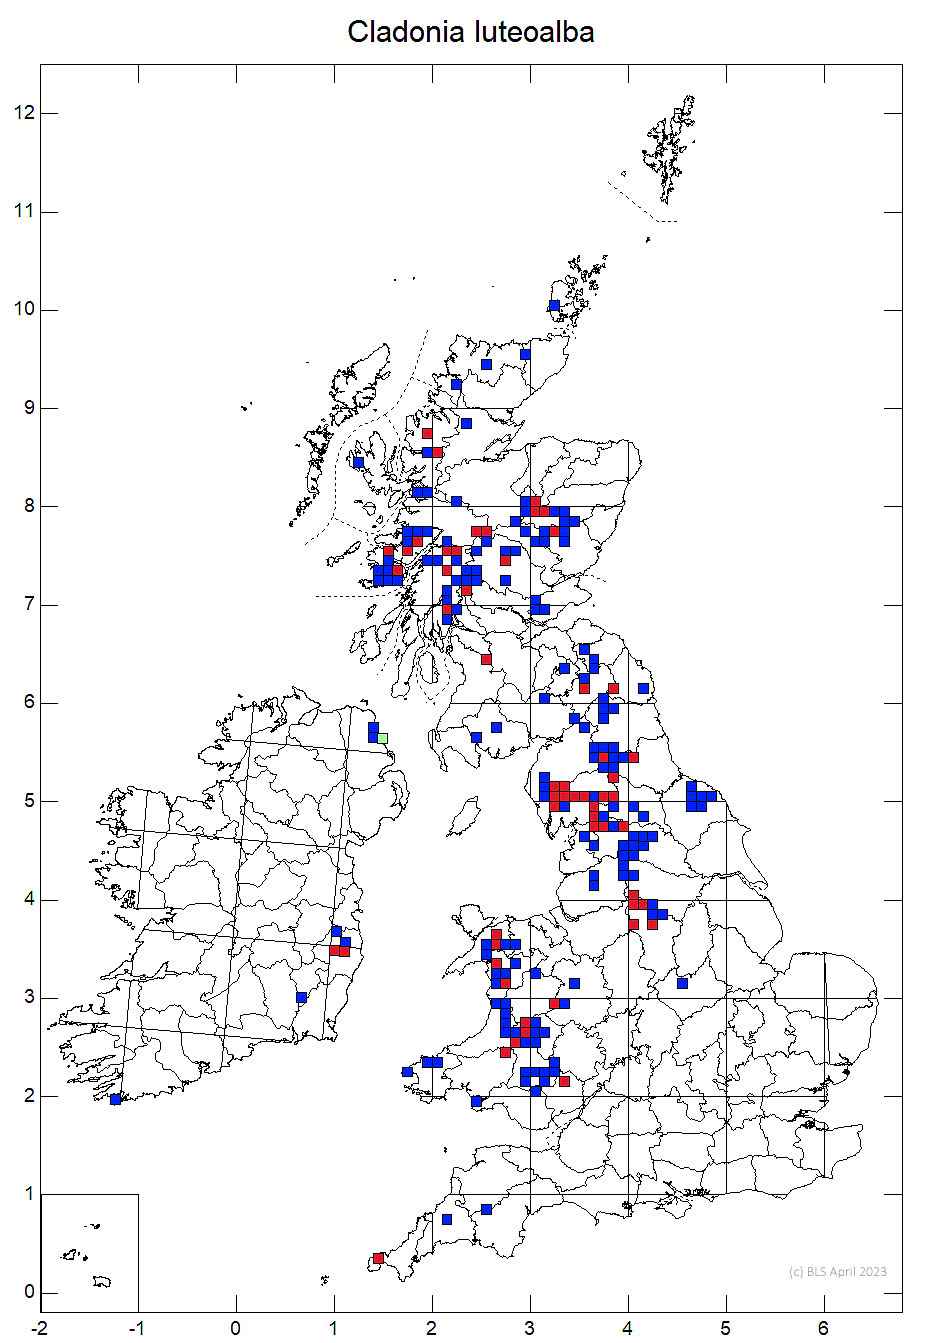 Cladonia luteoalba 10km sq distribution map